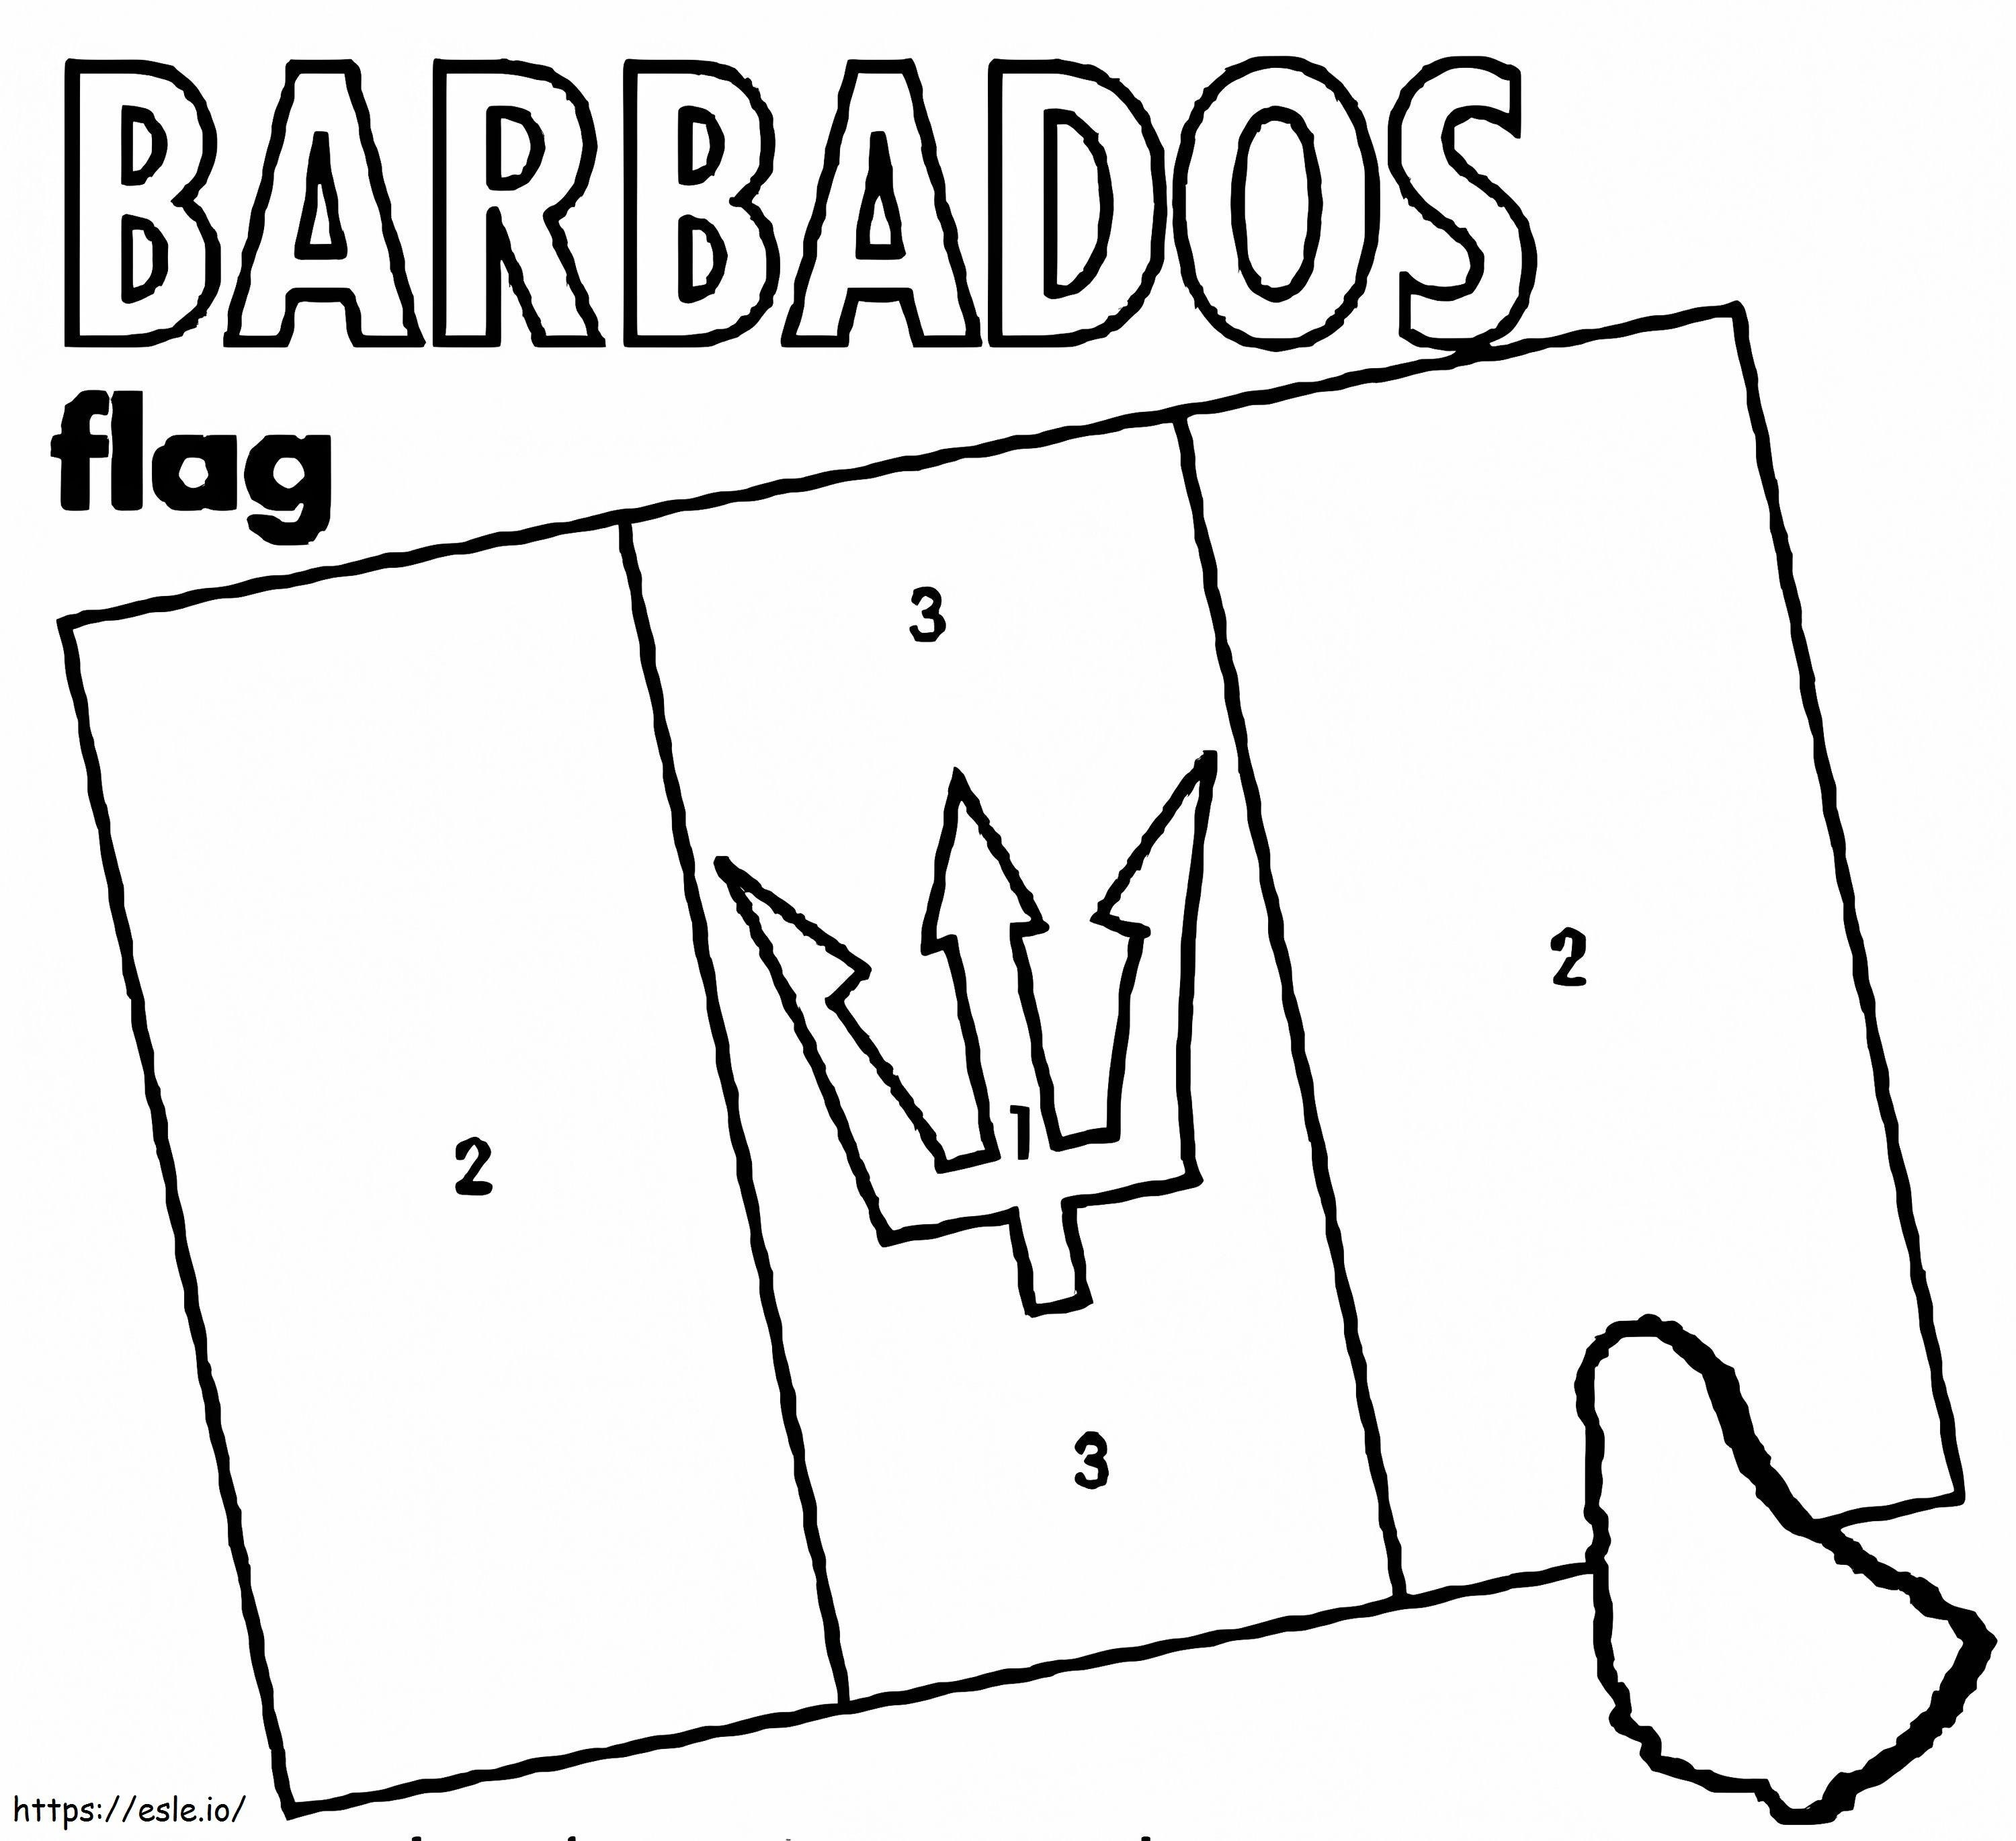 Bendera Barbados 3 Gambar Mewarnai